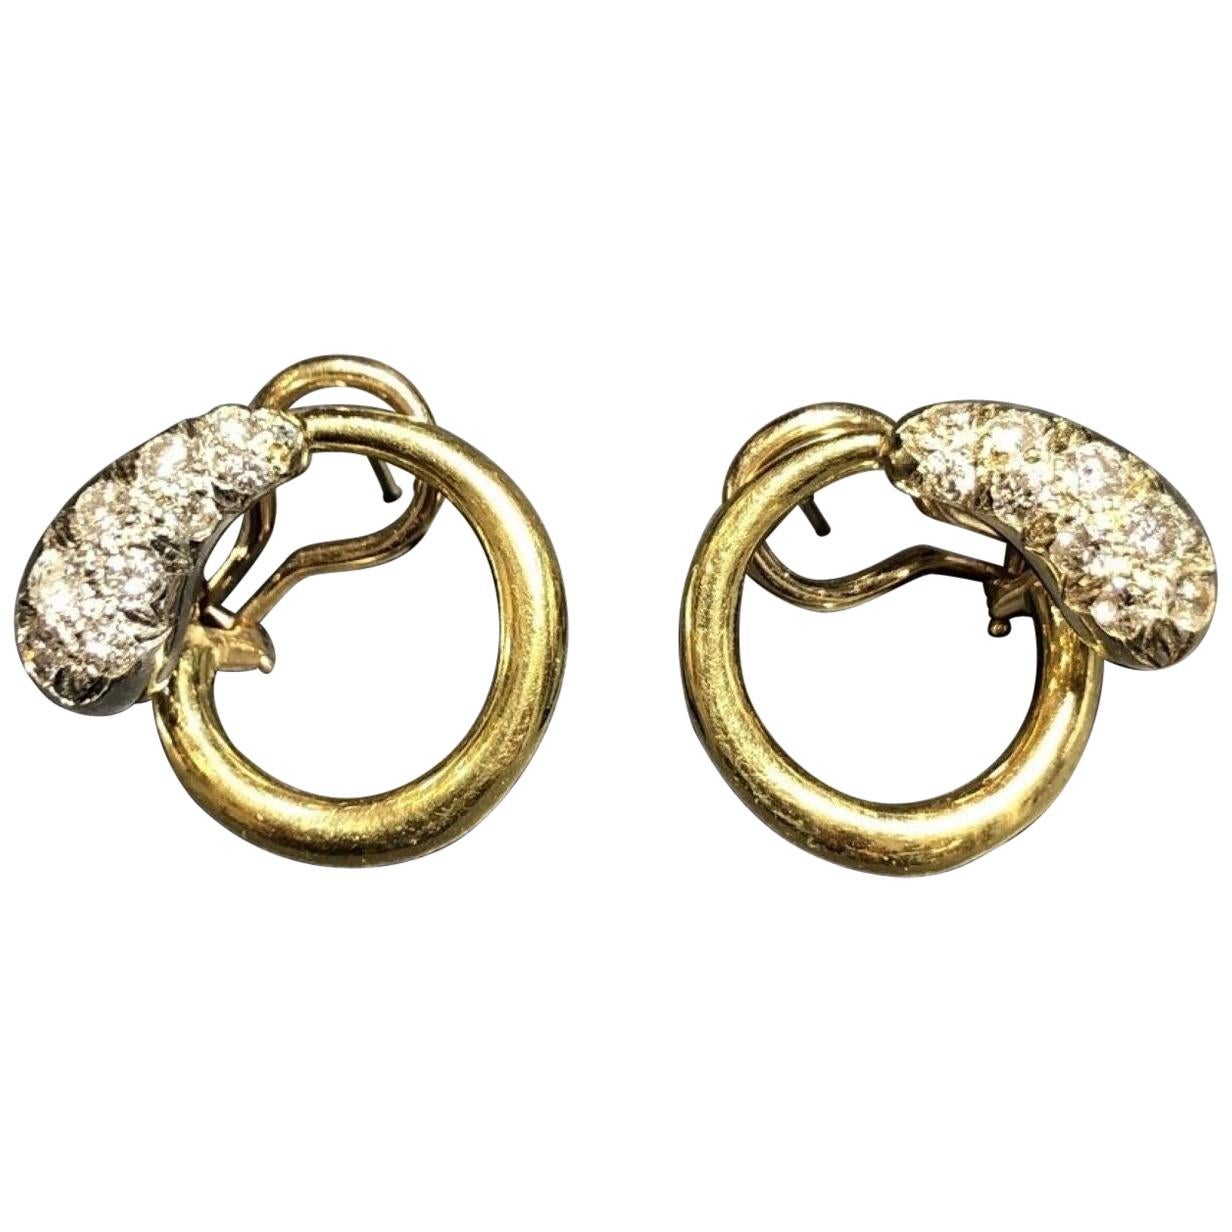 Aldo Cipullo Gold Diamond Clip Earrings